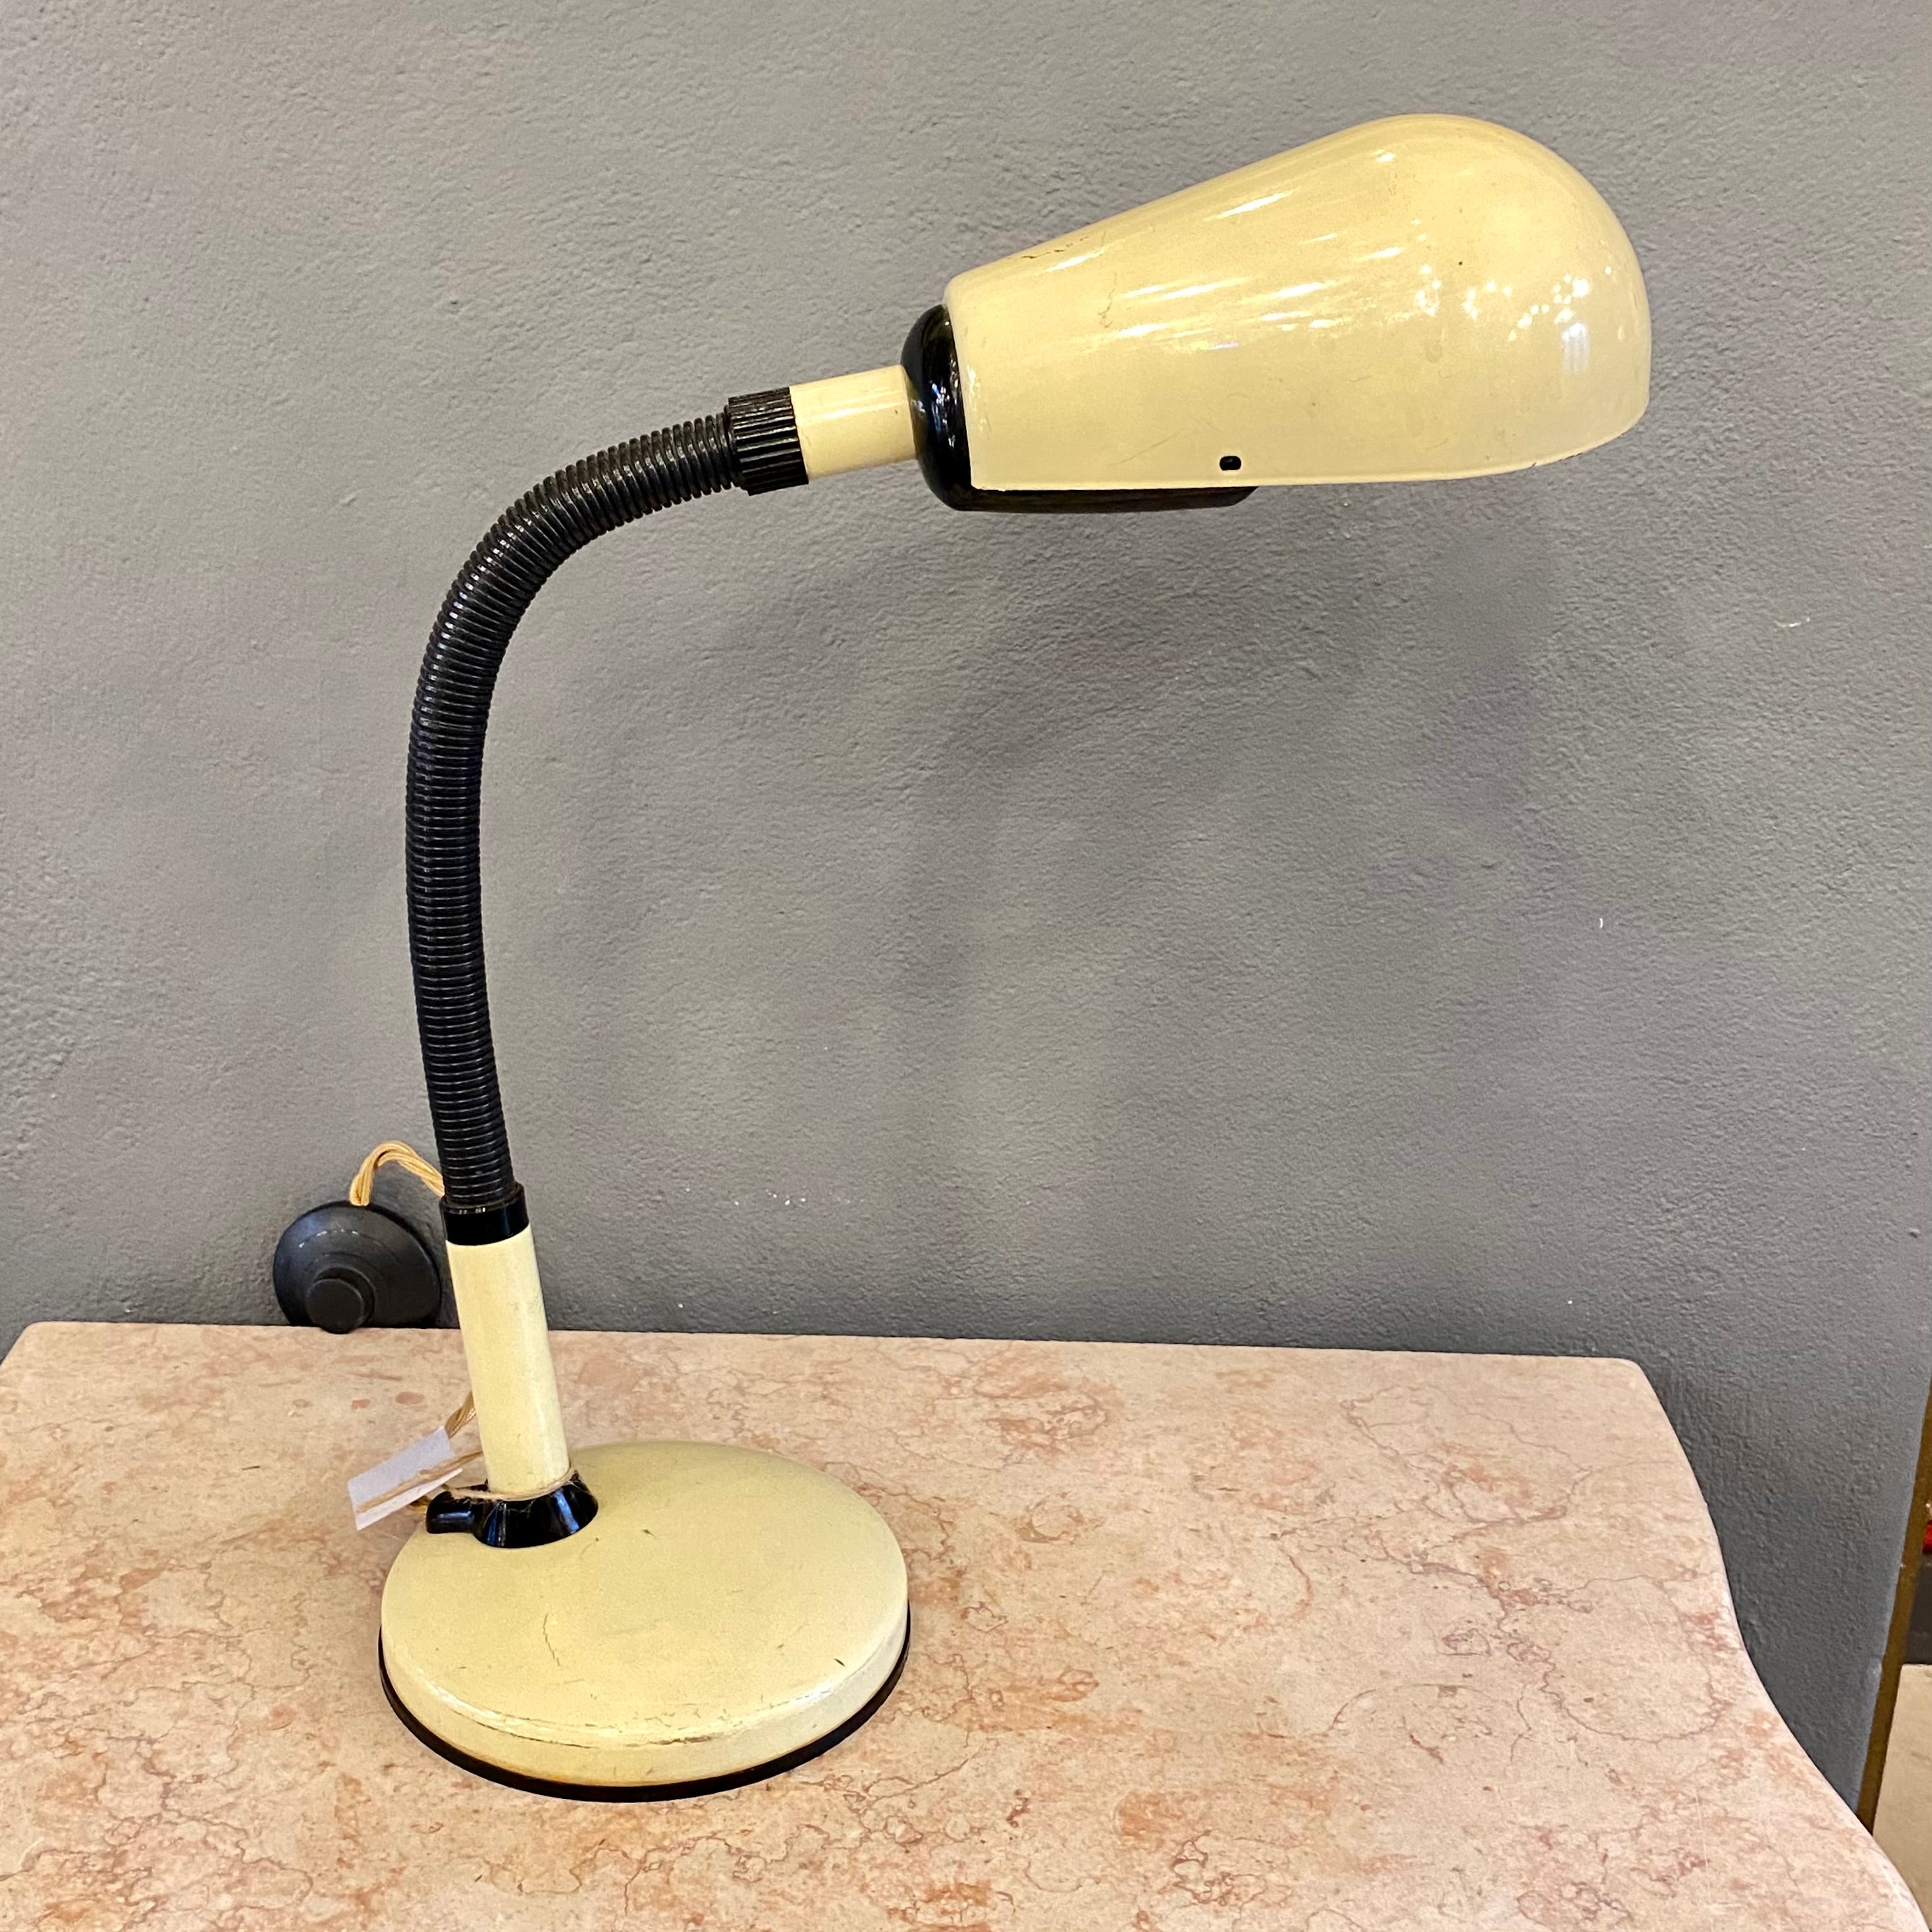 Very Cool Adjustable Mid Century Desk Lamp